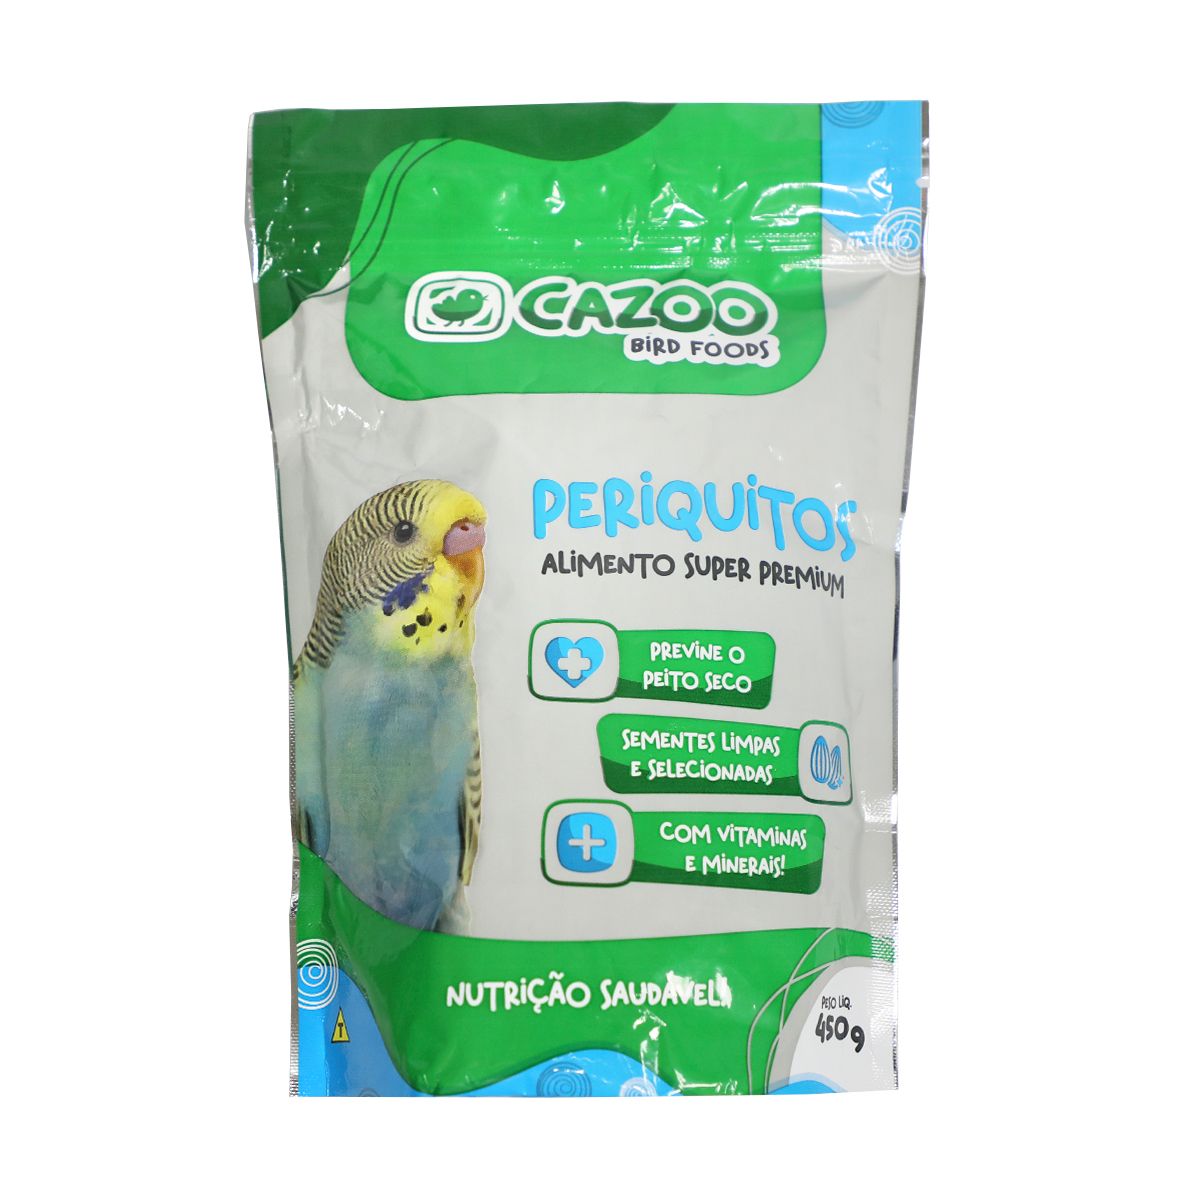 Alimento para Aves Cazoo Premium Periquitos 450g image number 0